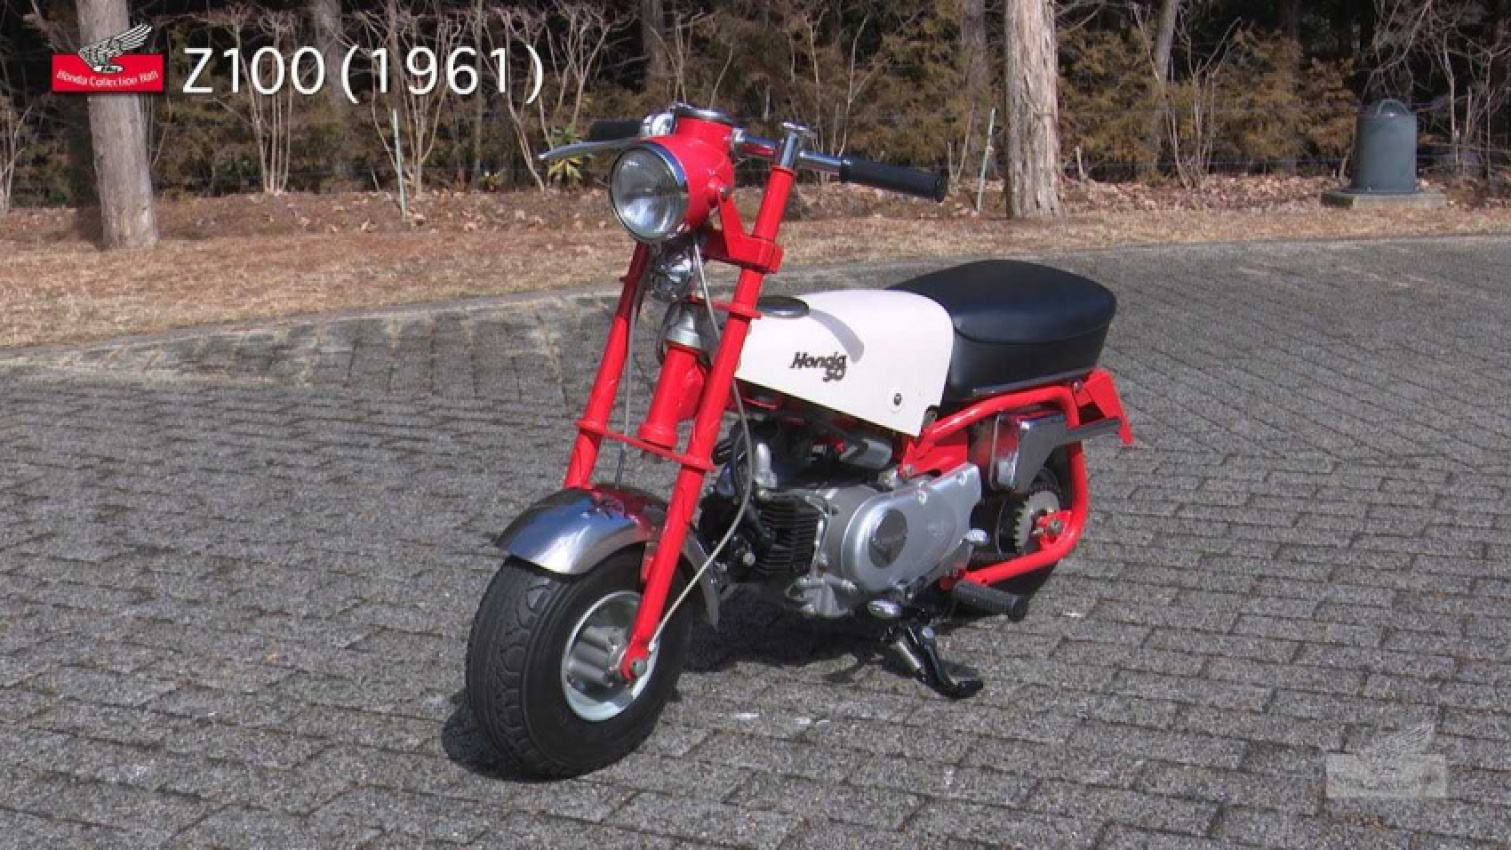 autos, cars, history, honda, here's the honda monkey bike that started it all 60 years ago